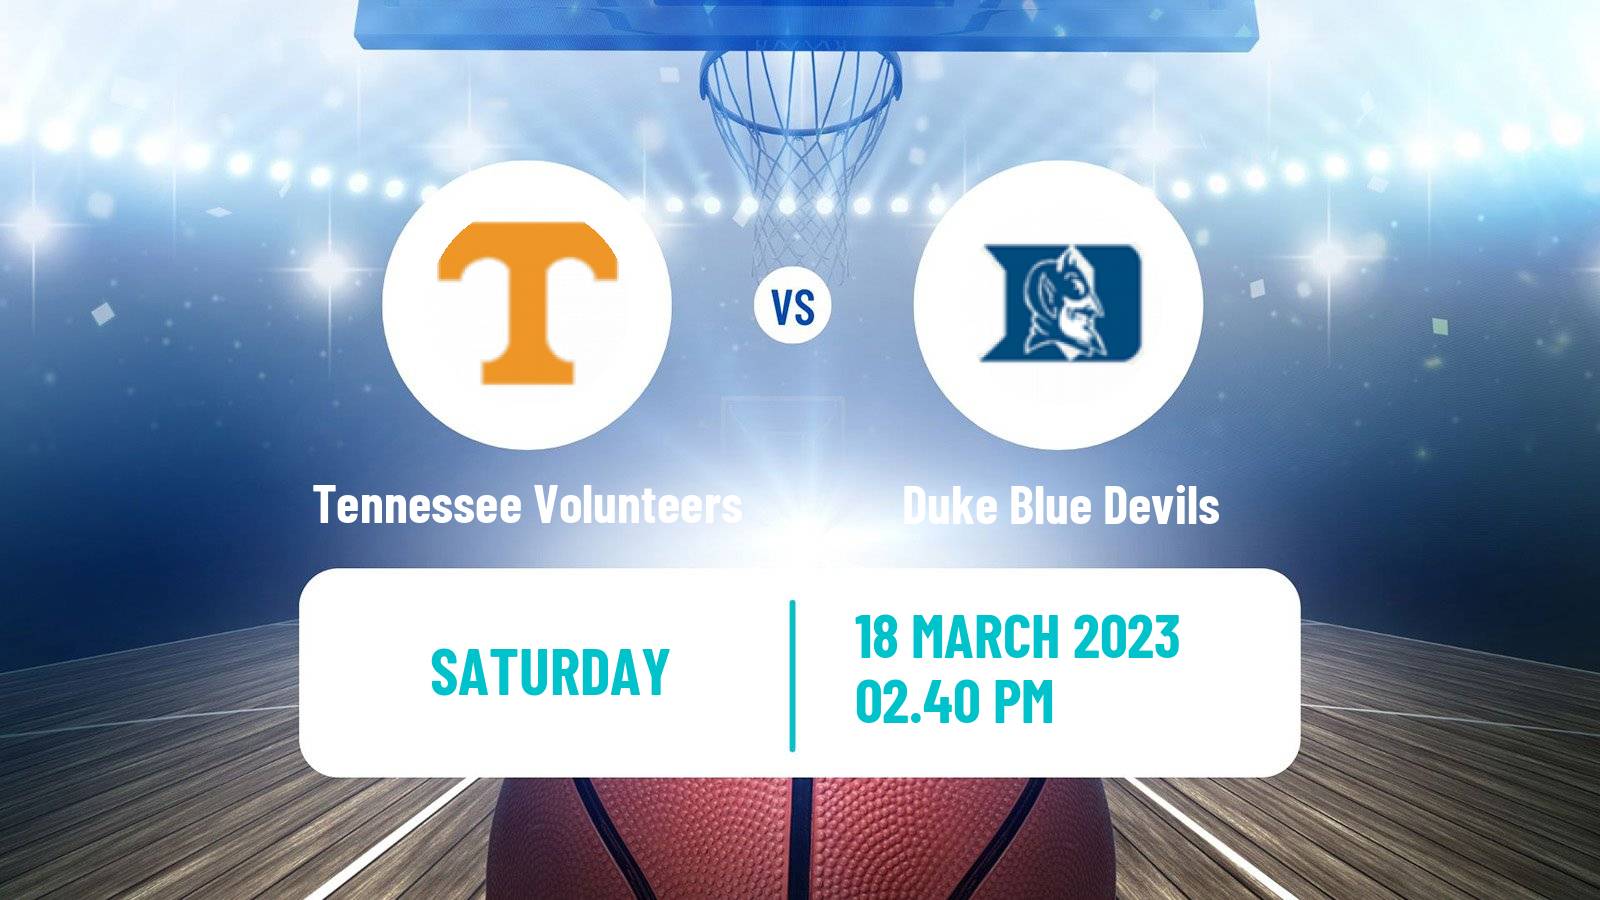 Basketball NCAA College Basketball Tennessee Volunteers - Duke Blue Devils